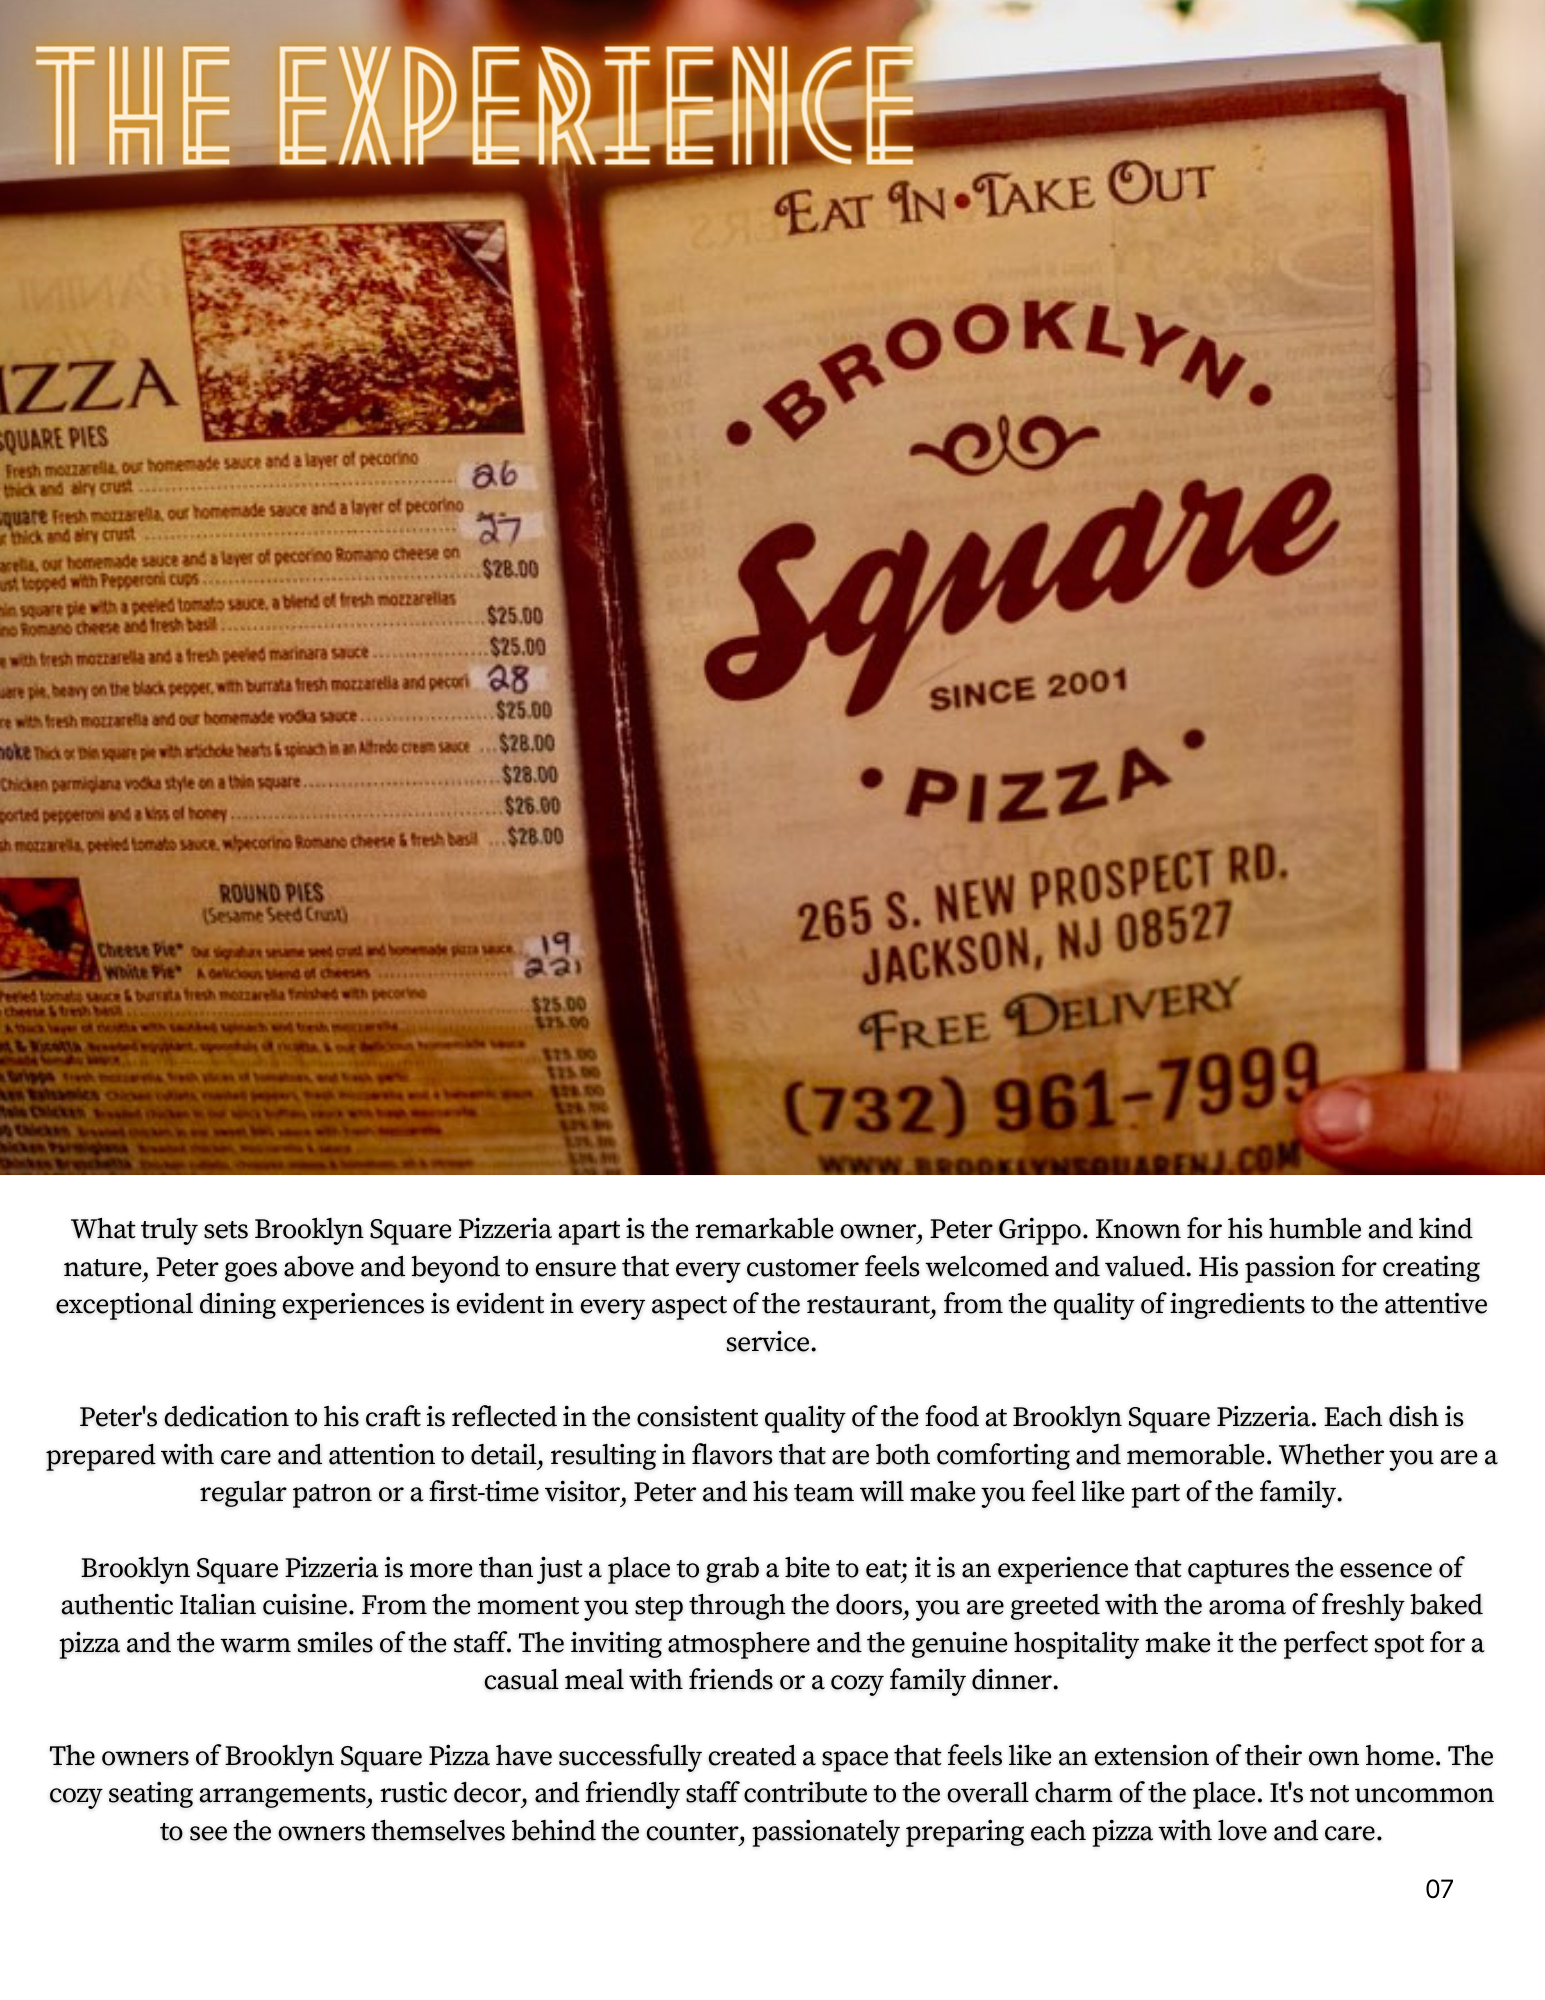 Brooklyn Square Puzza - Article Spread 1 - Right Side.PNG